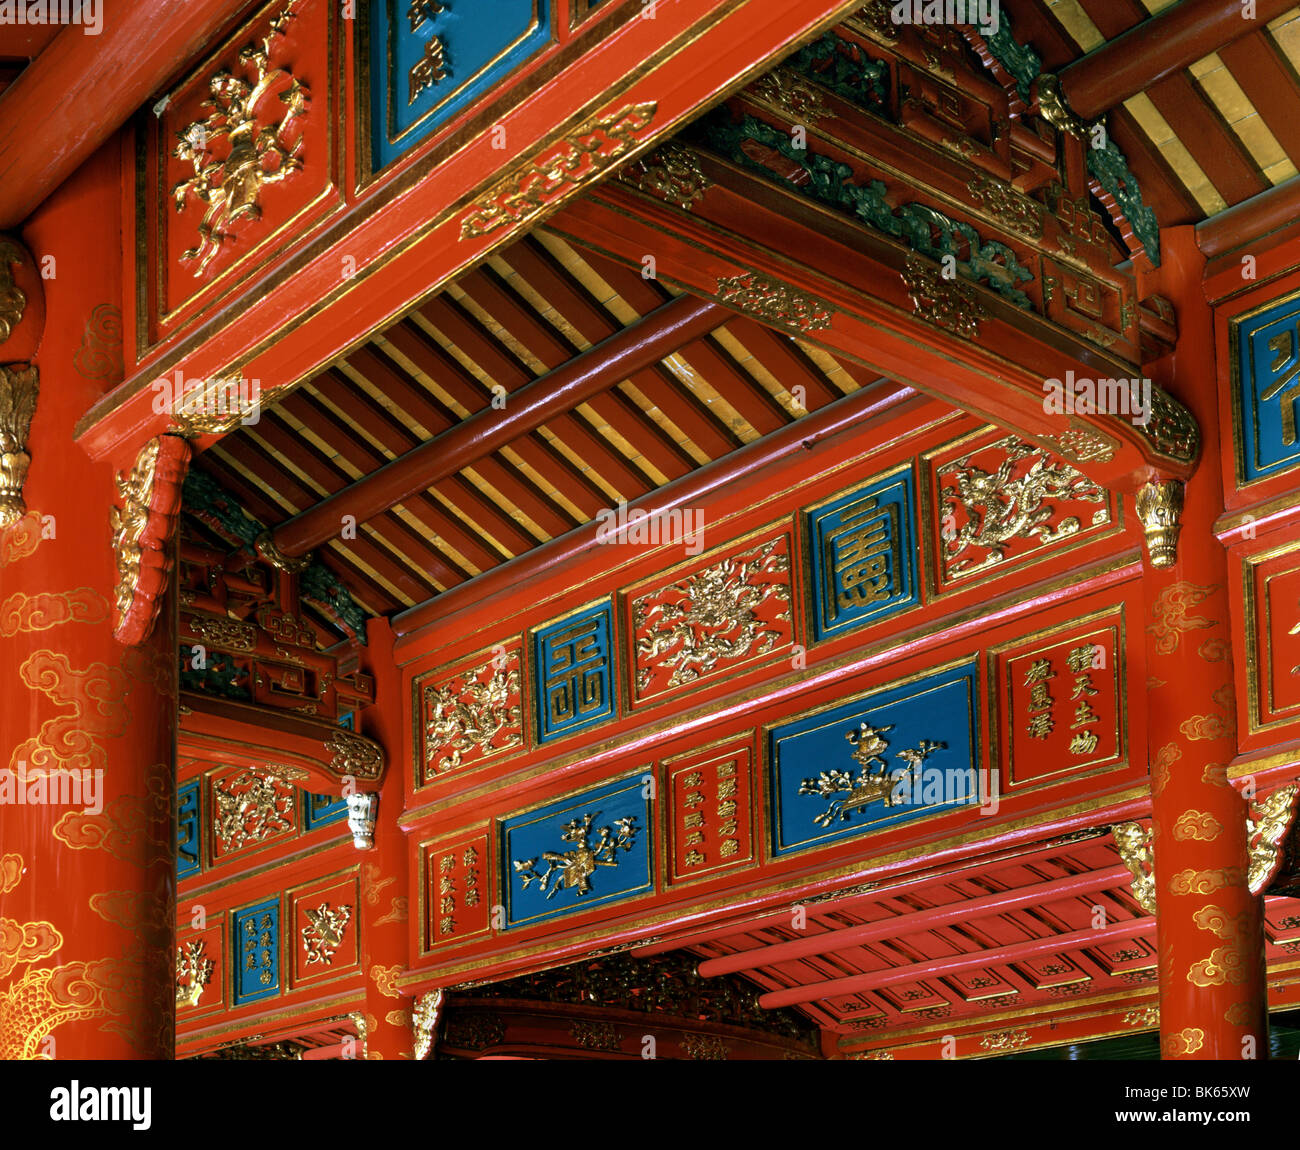 Influenza cinese nell'architettura, Royal mausolei, tonalità, Vietnam, Indocina, Asia sud-orientale, Asia Foto Stock